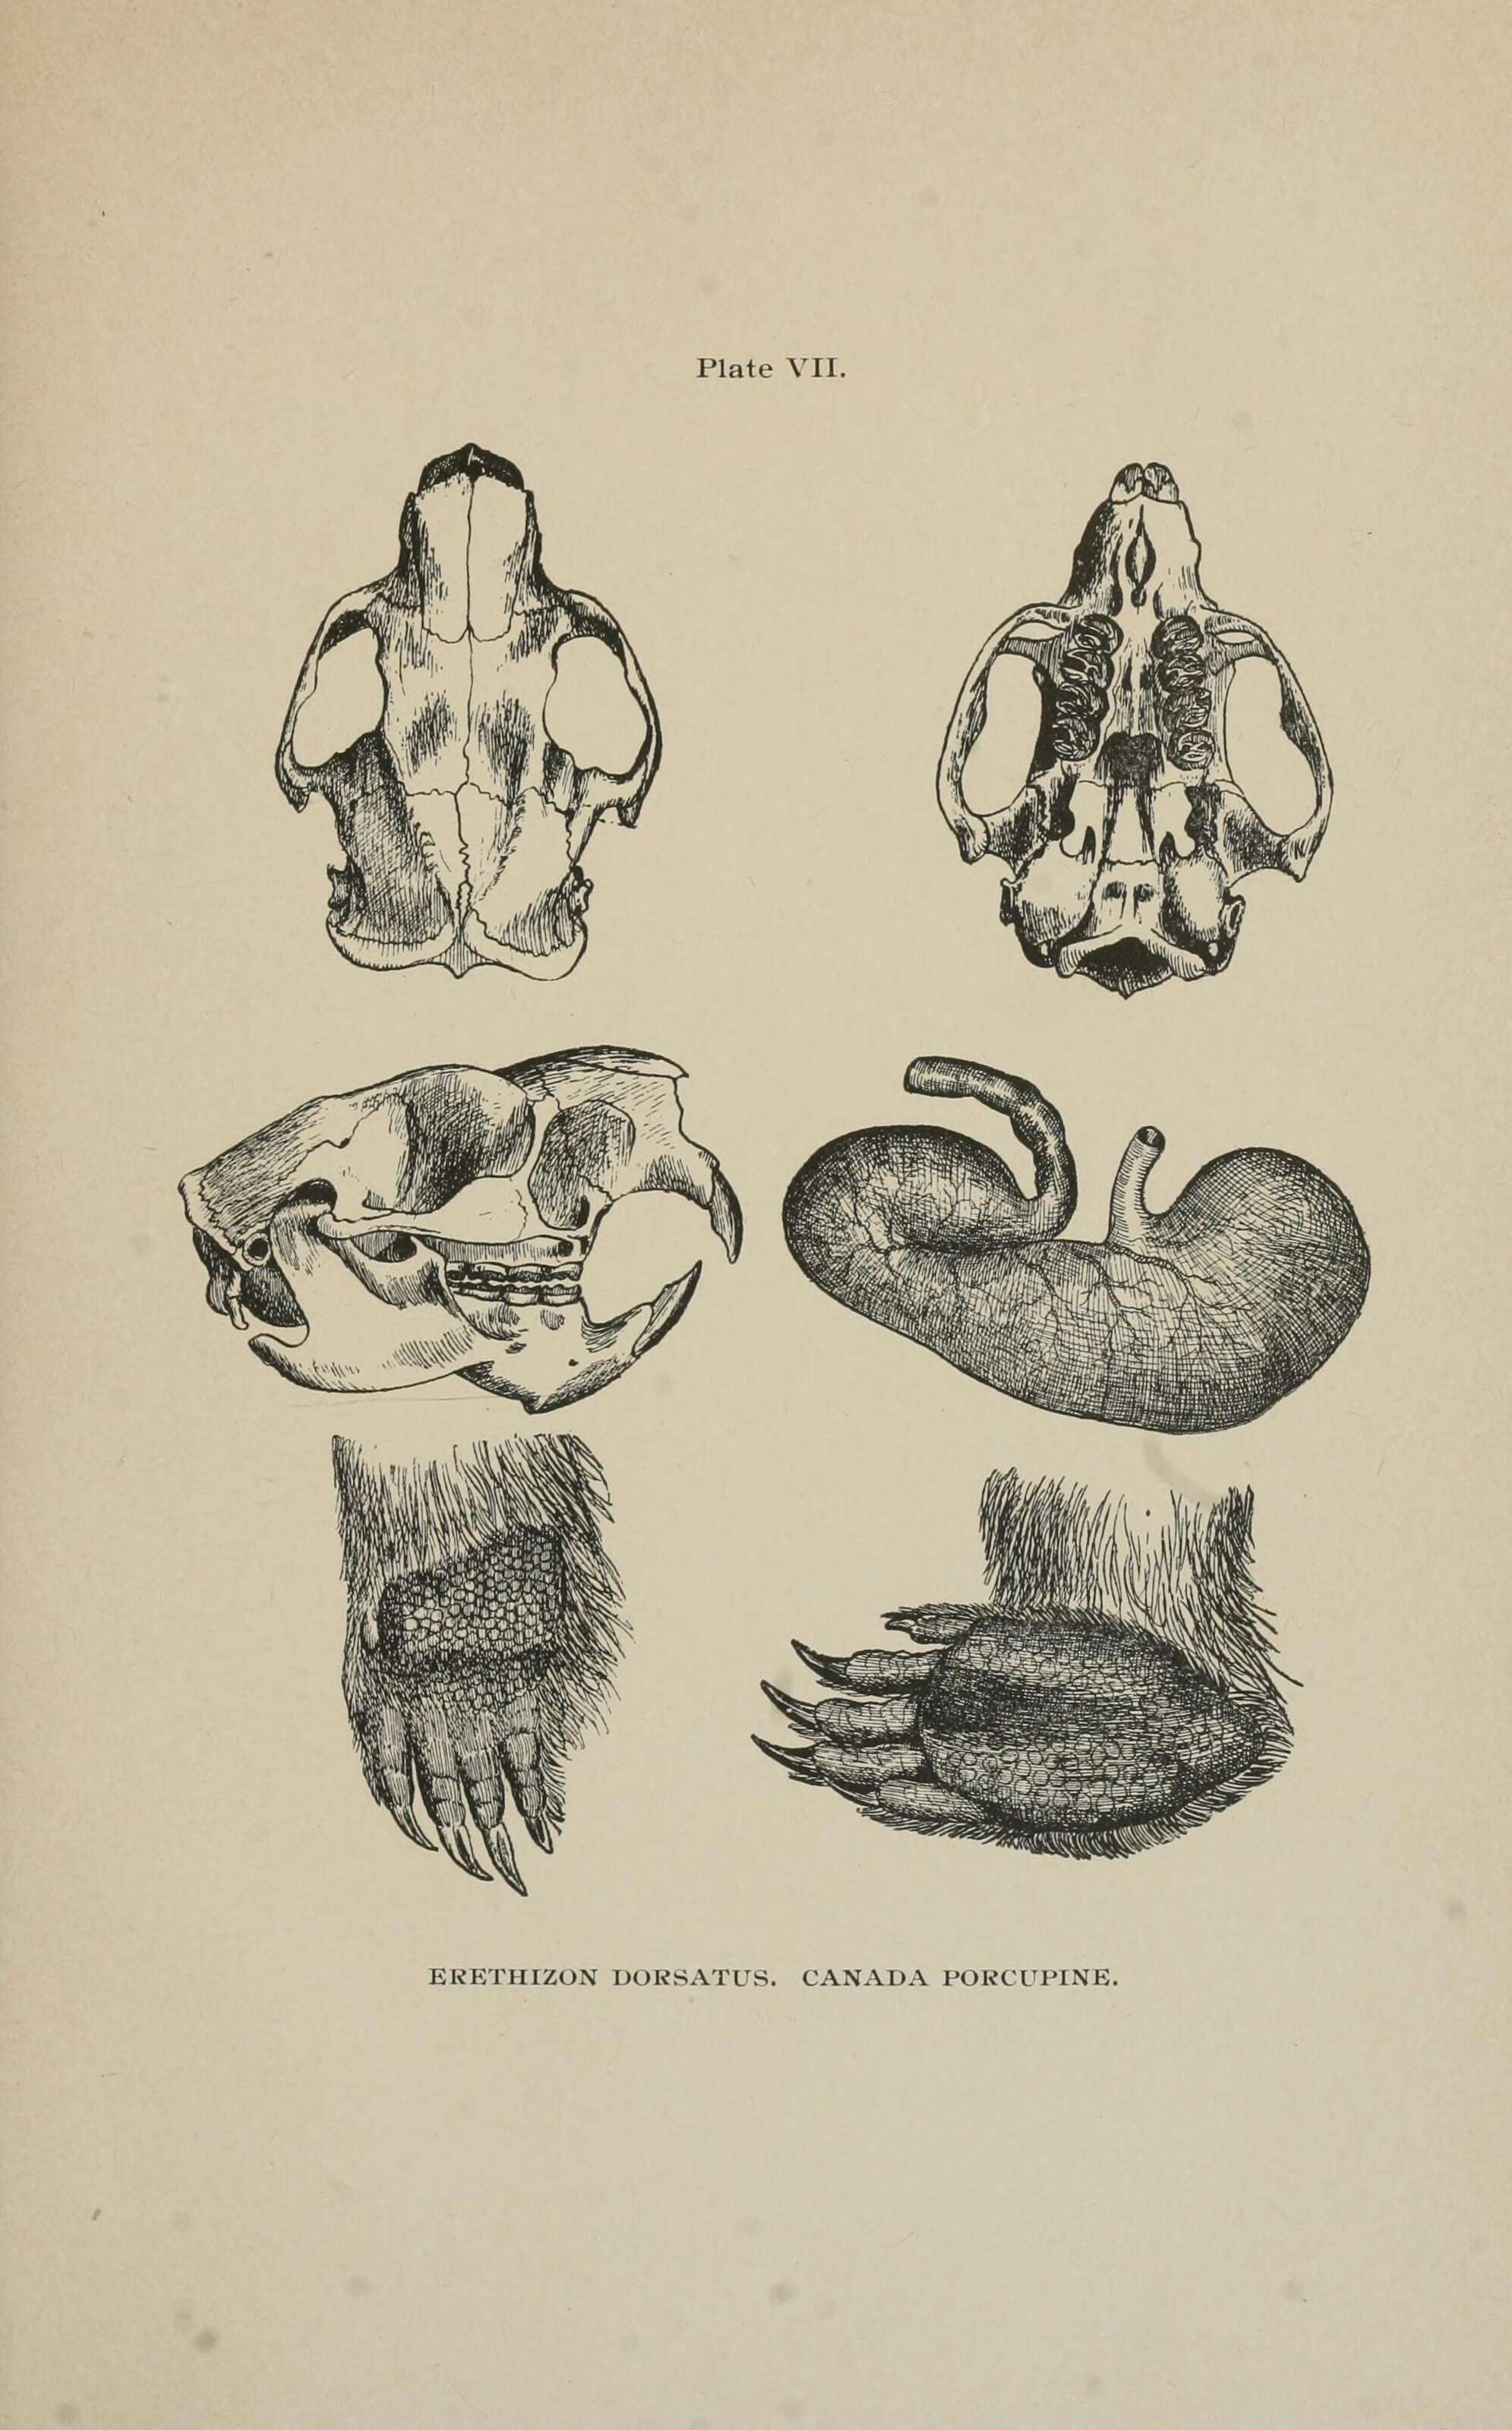 Sivun Erethizon dorsatus (Linnaeus 1758) kuva